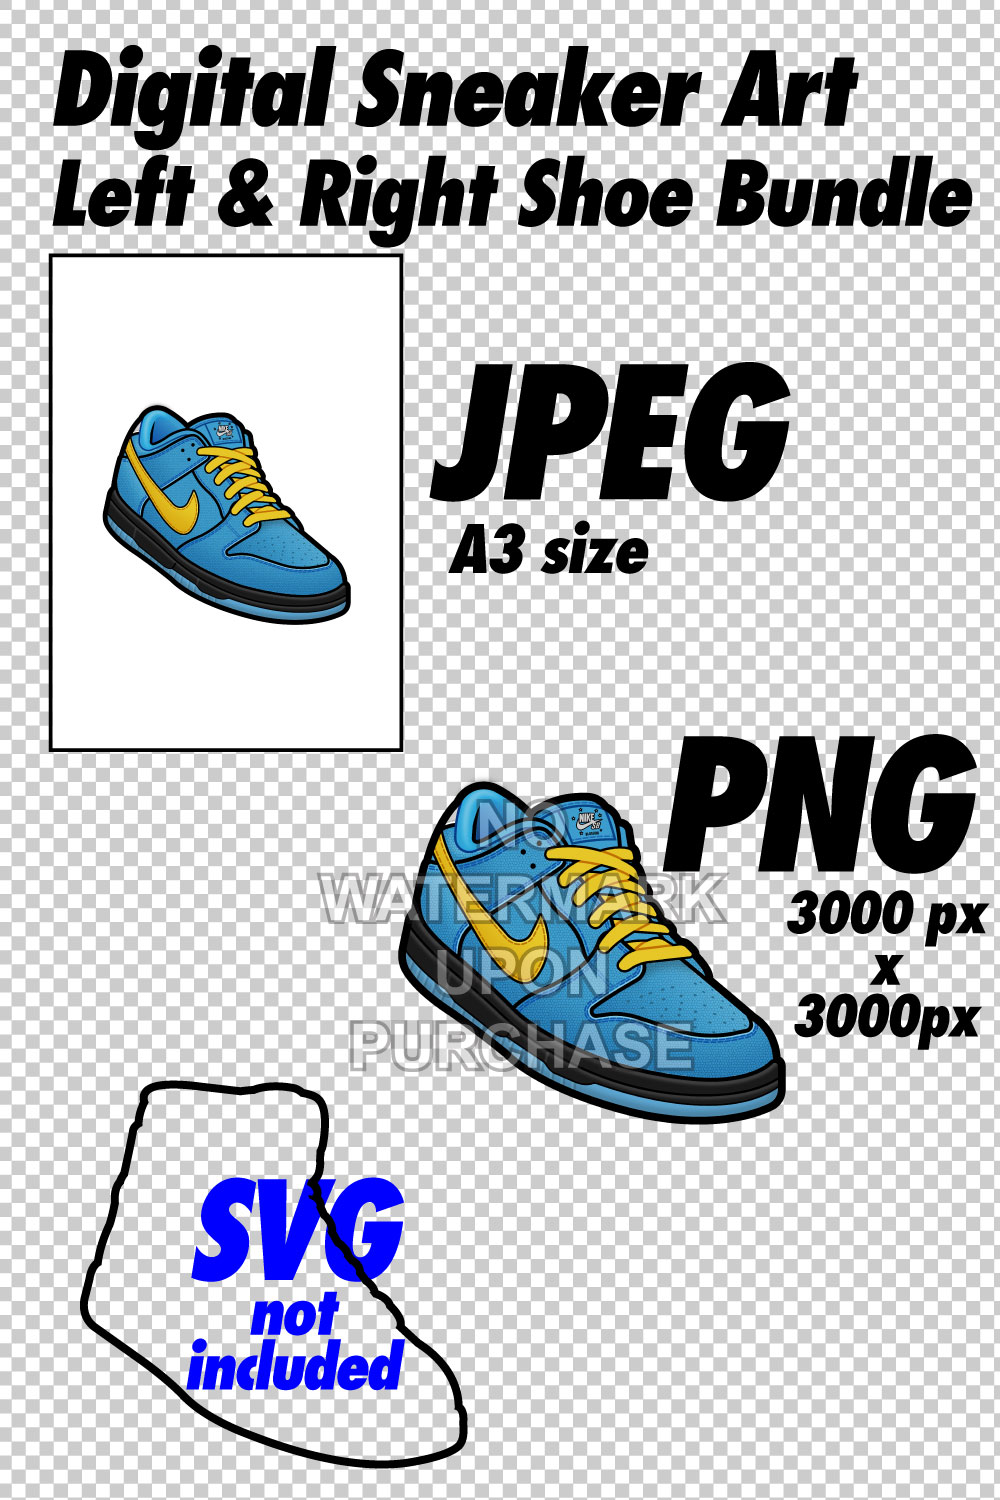 Dunk Low Powerpuff Girls Bubbles JPEG PNG Sneaker Art Right & Left Shoe Bundle pinterest preview image.